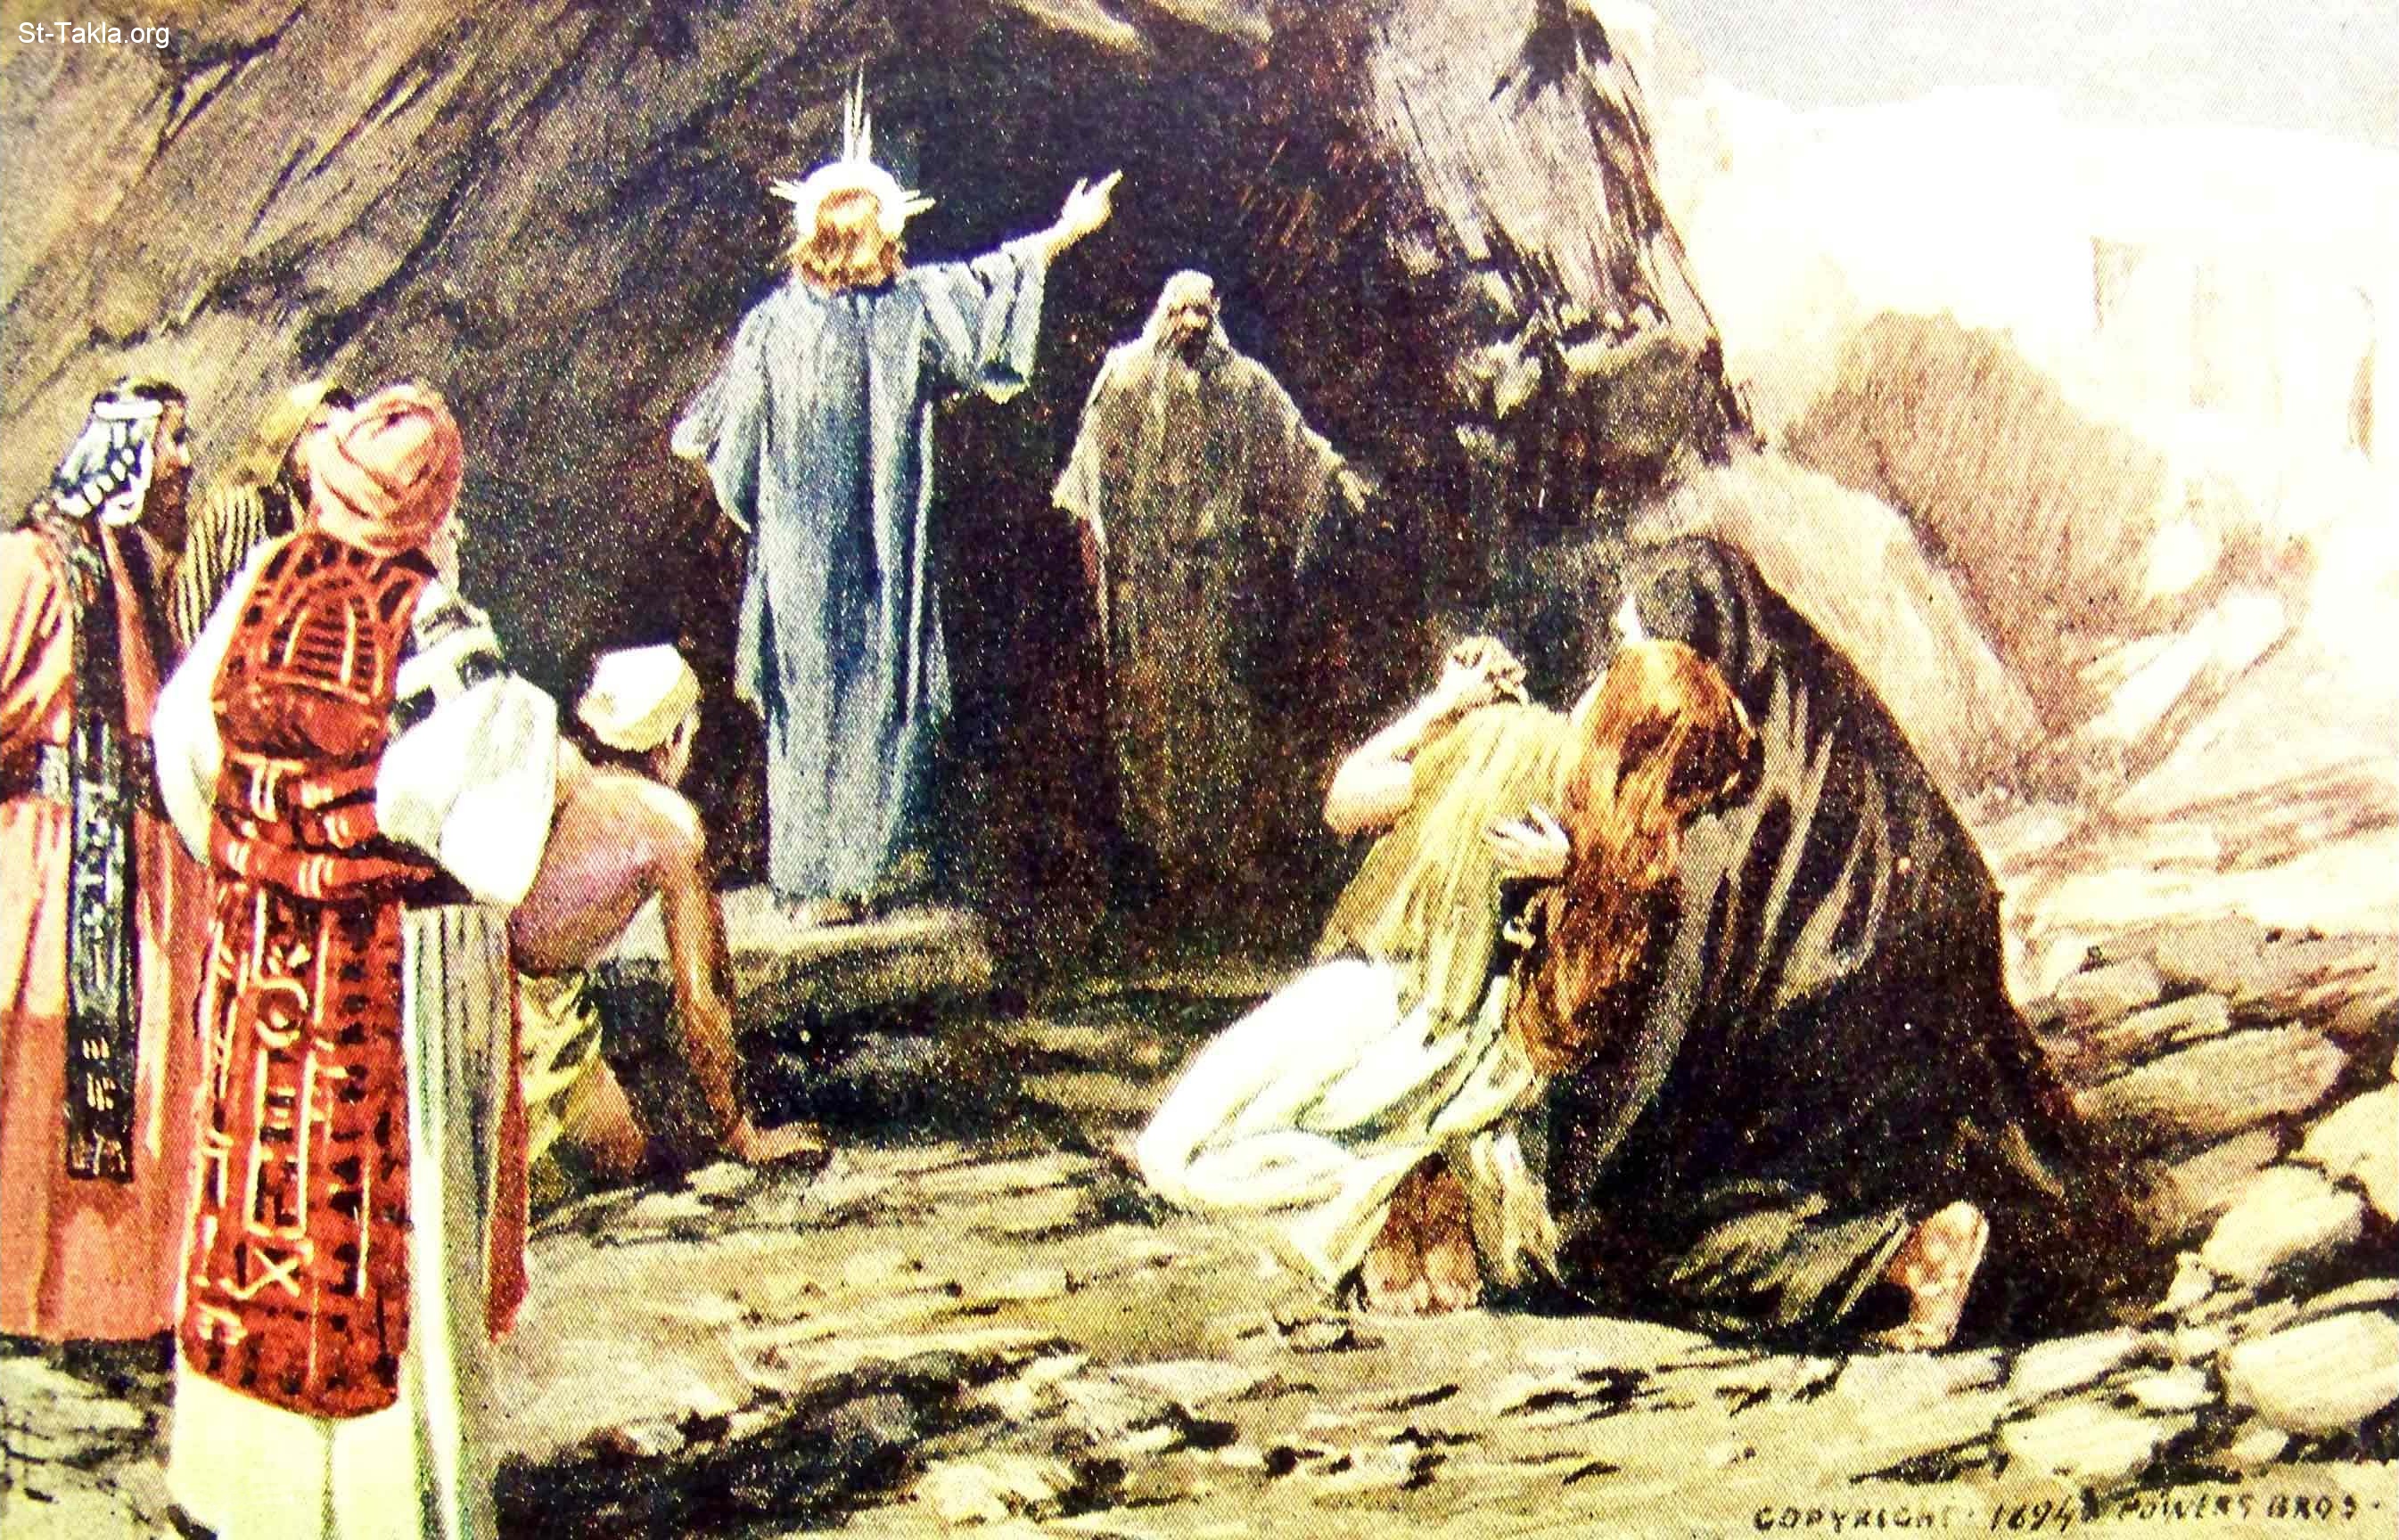 bible story of lazarus